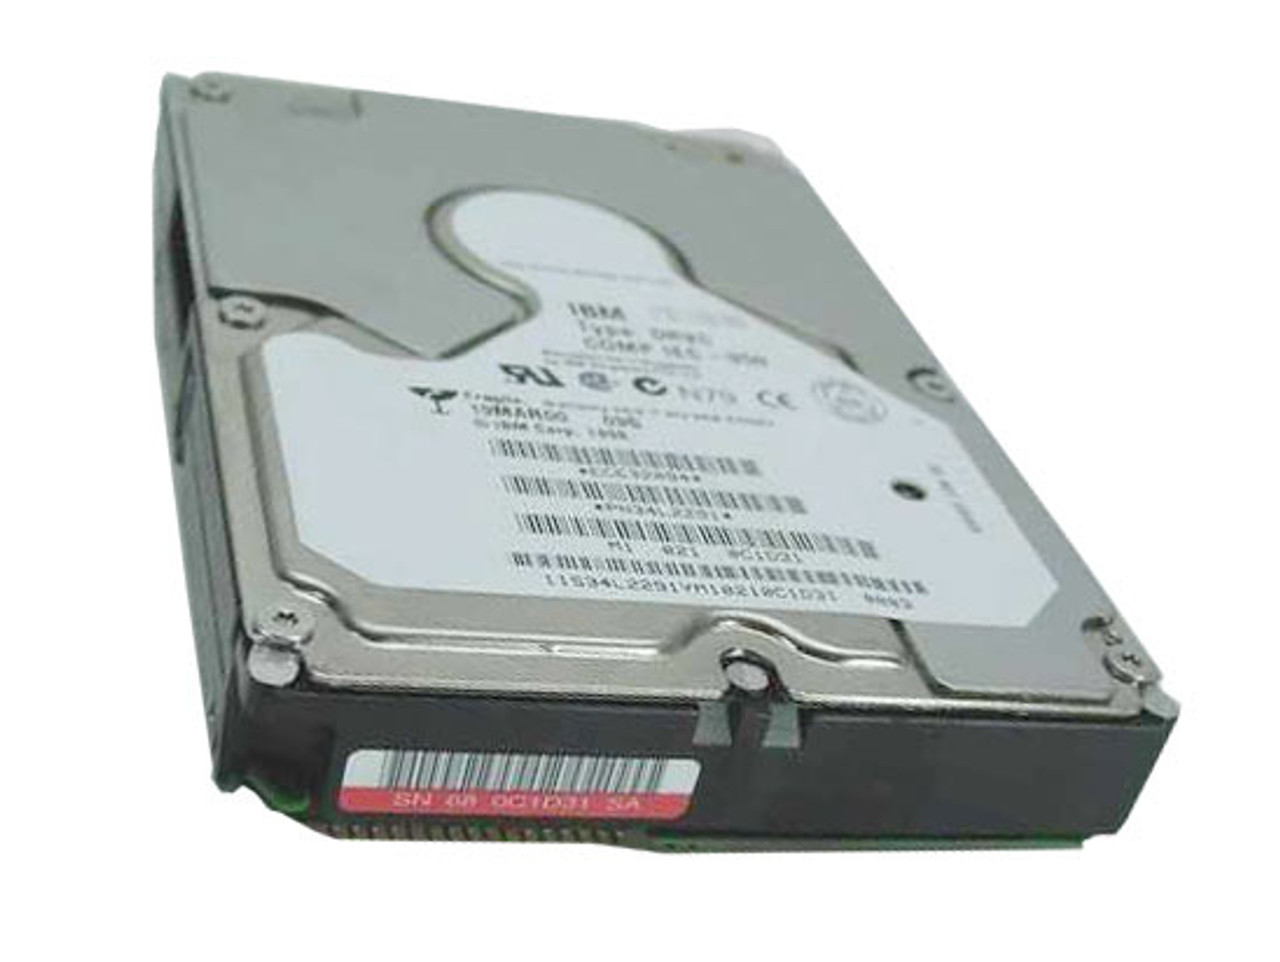 18P1129 IBM 36.4GB SCSI (SSA) 3.5-inch Internal Hard Drive